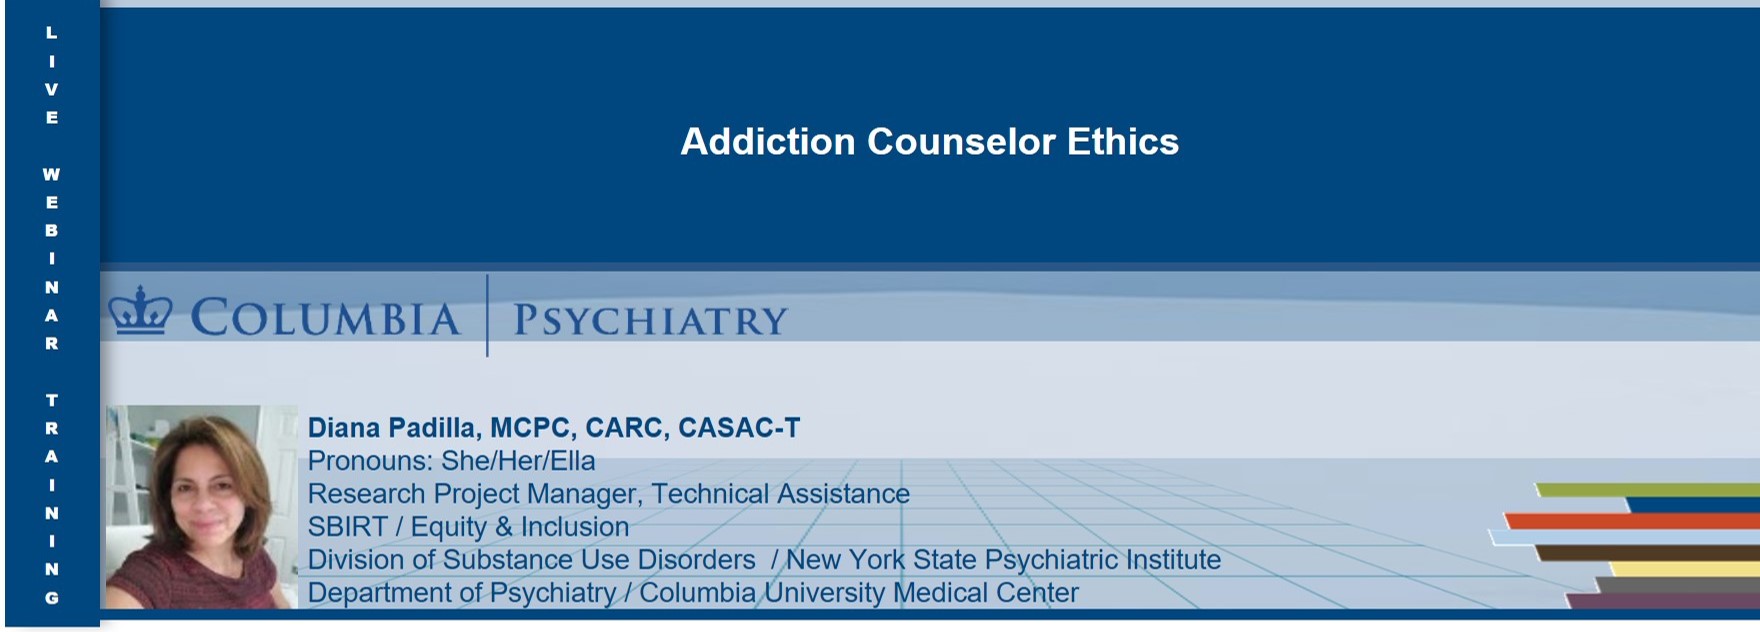 Addiction Counselor Ethics